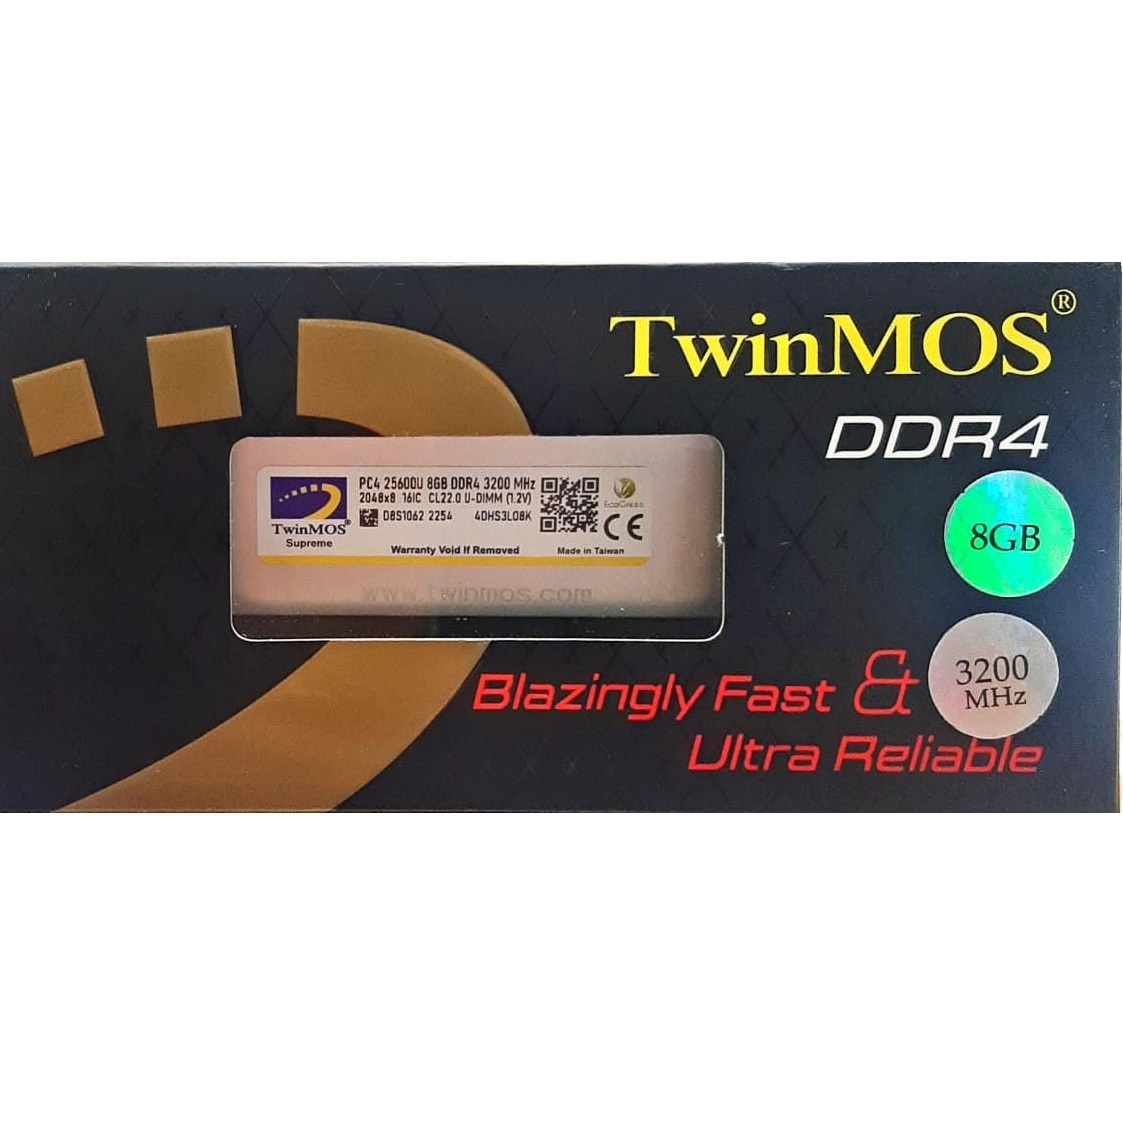 TwinMOS DDR4 8GB 3200MHz | رم كامپيوتر - 